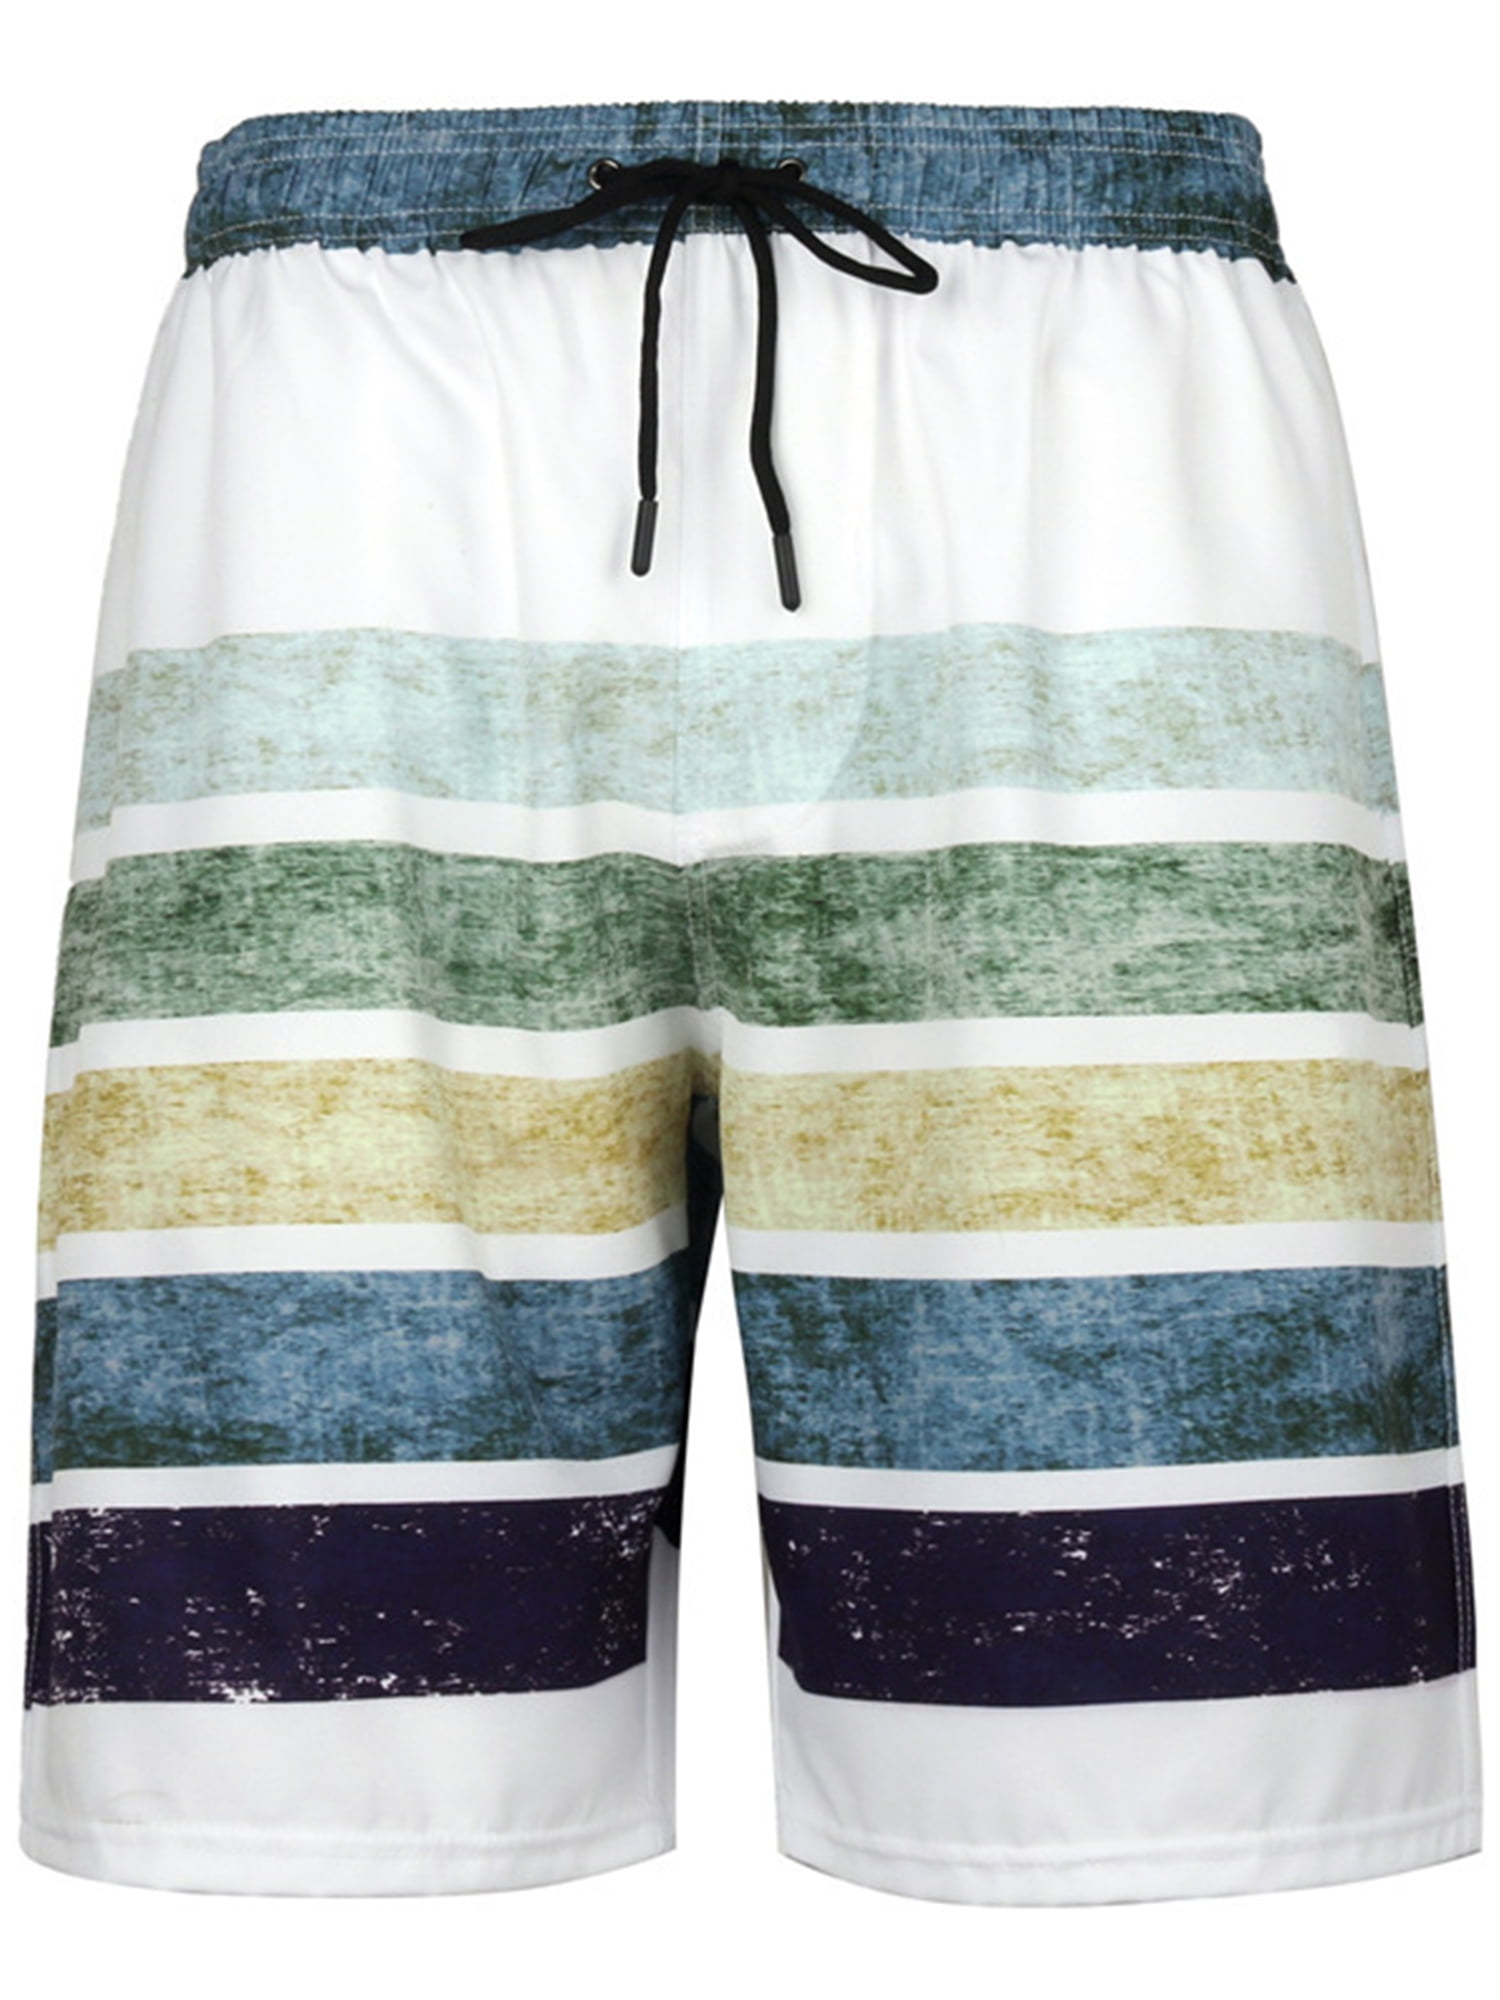 Niuer Mens Swim Trunks with Pockets Beach Swimwear Quick Dry Elastic ...